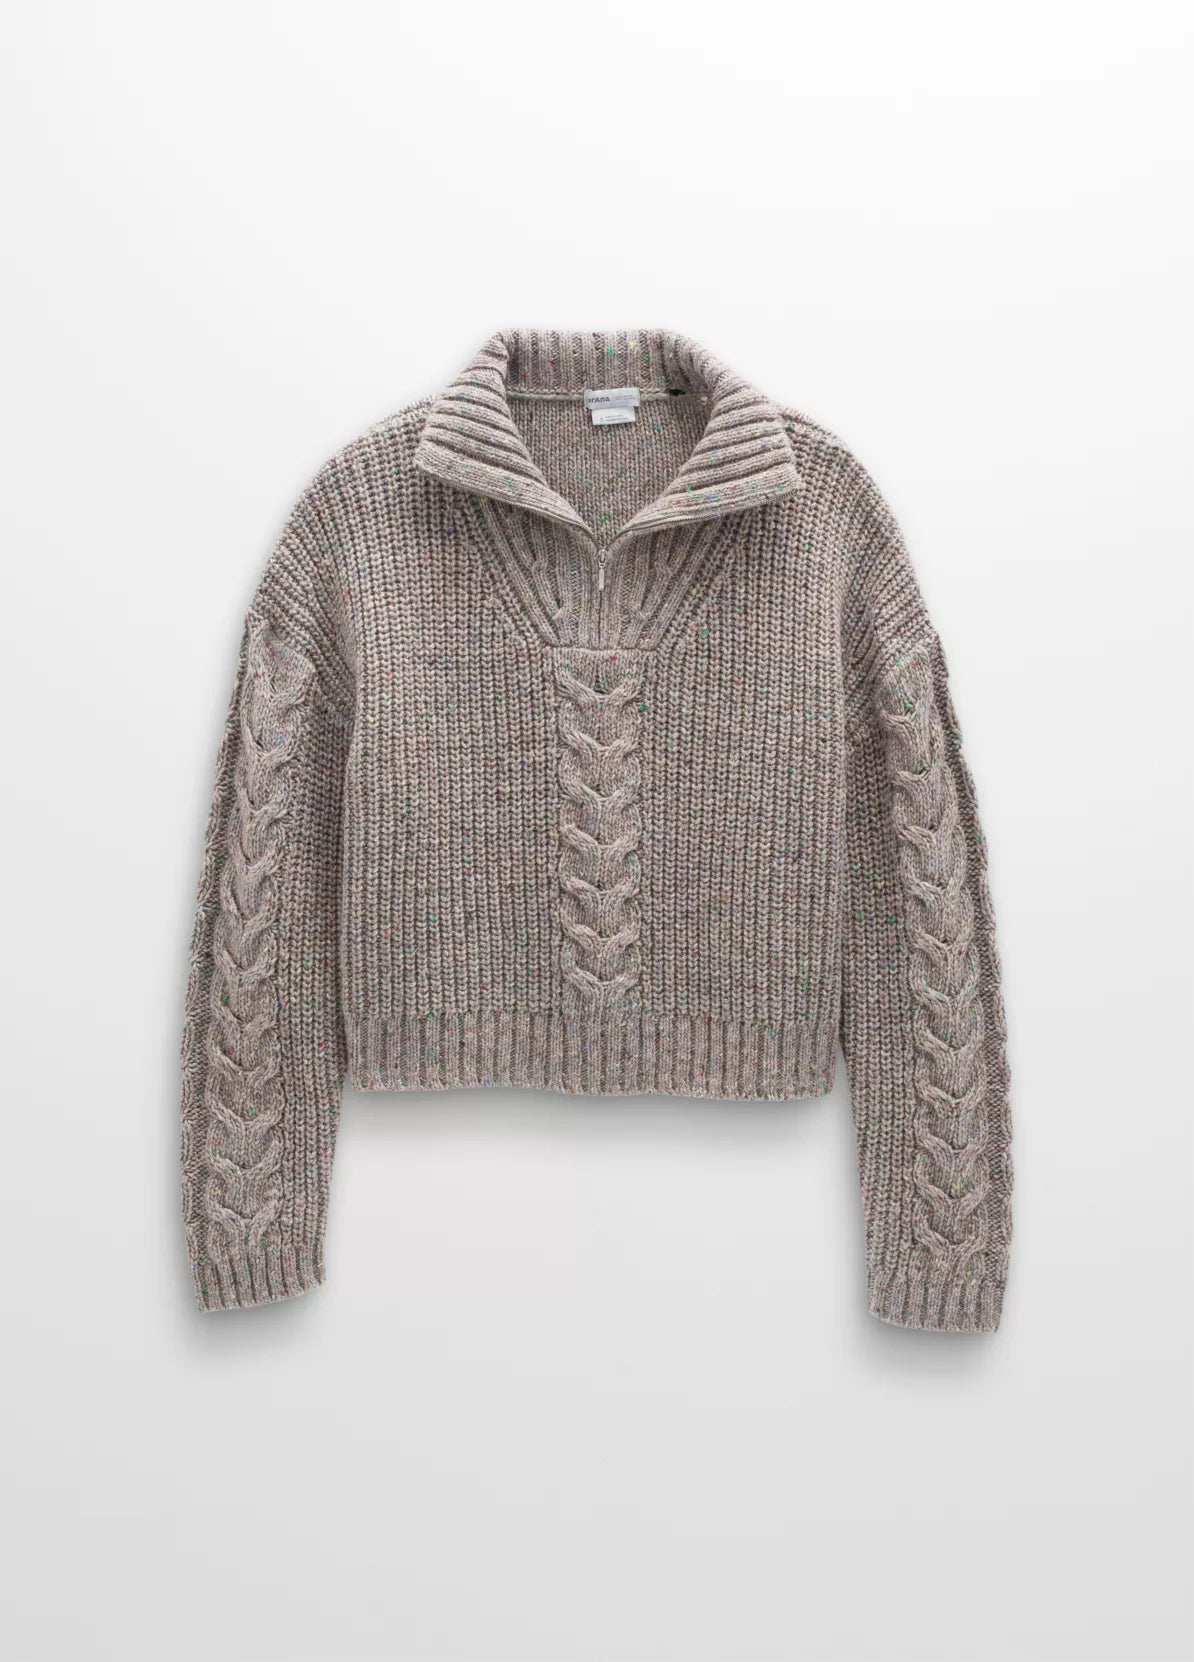 Laurel Creek Sweater